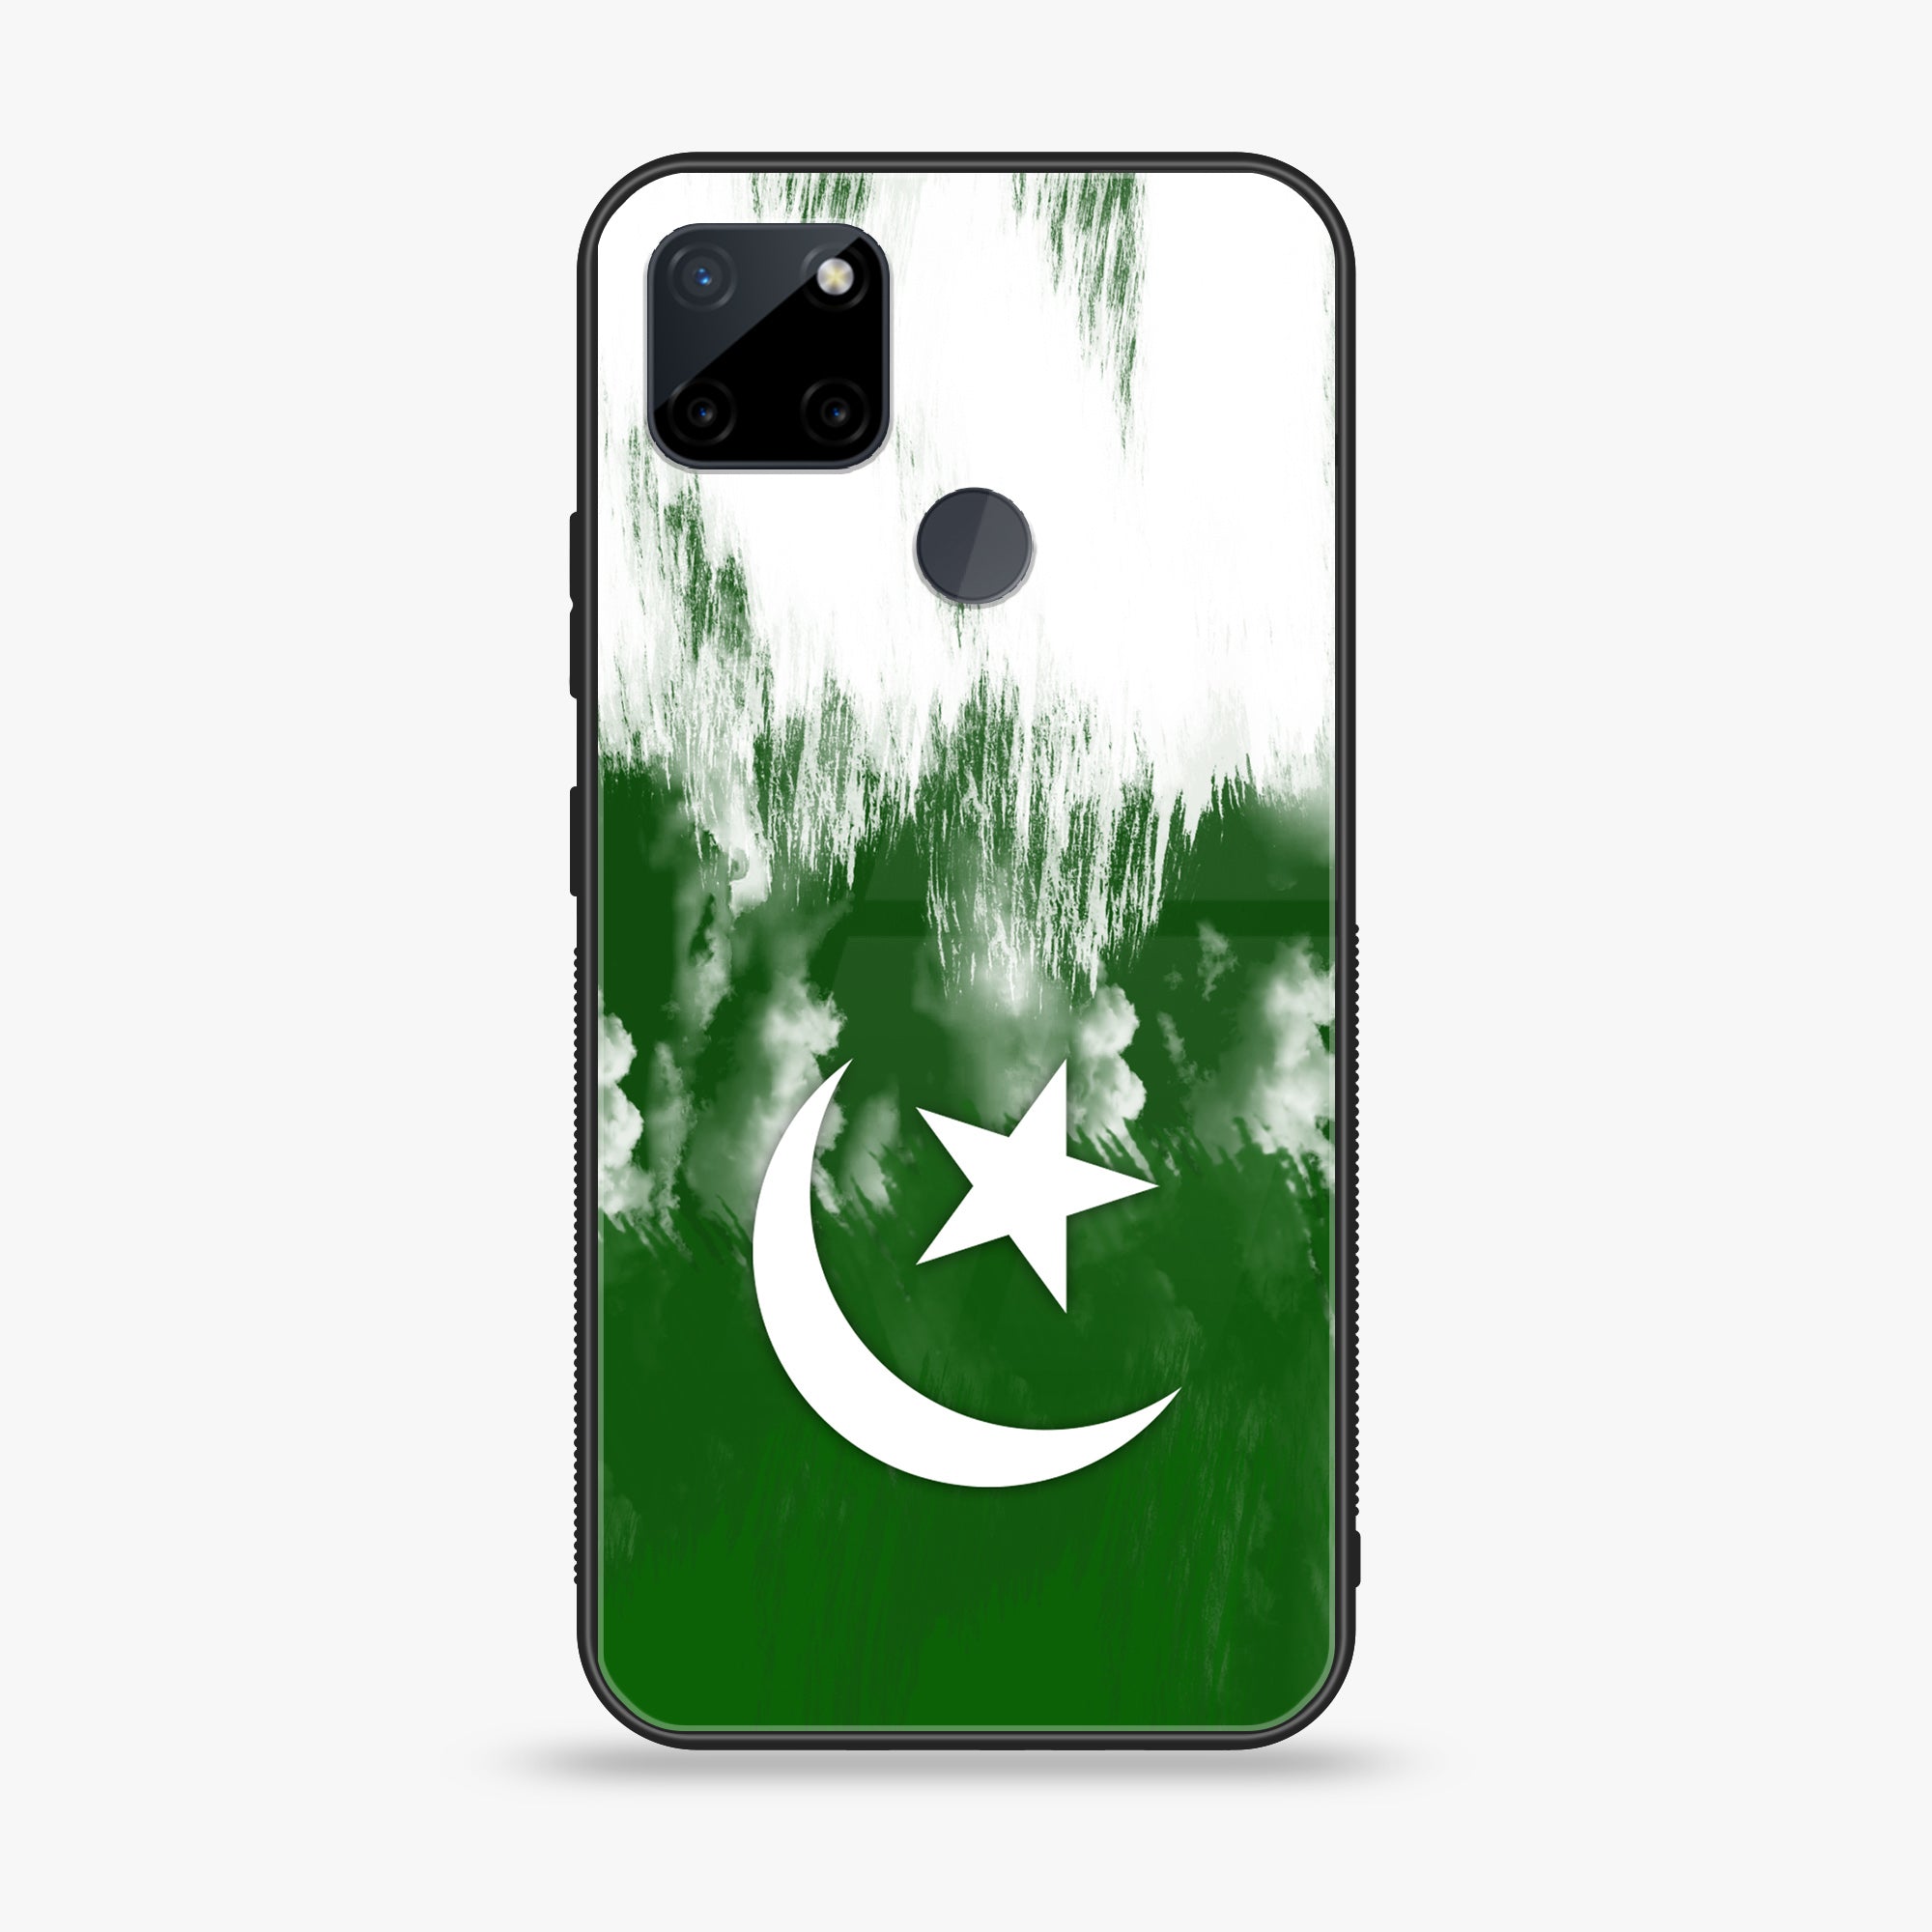 Realme C21Y - Pakistani Flag Series - Premium Printed Glass soft Bumper shock Proof Case